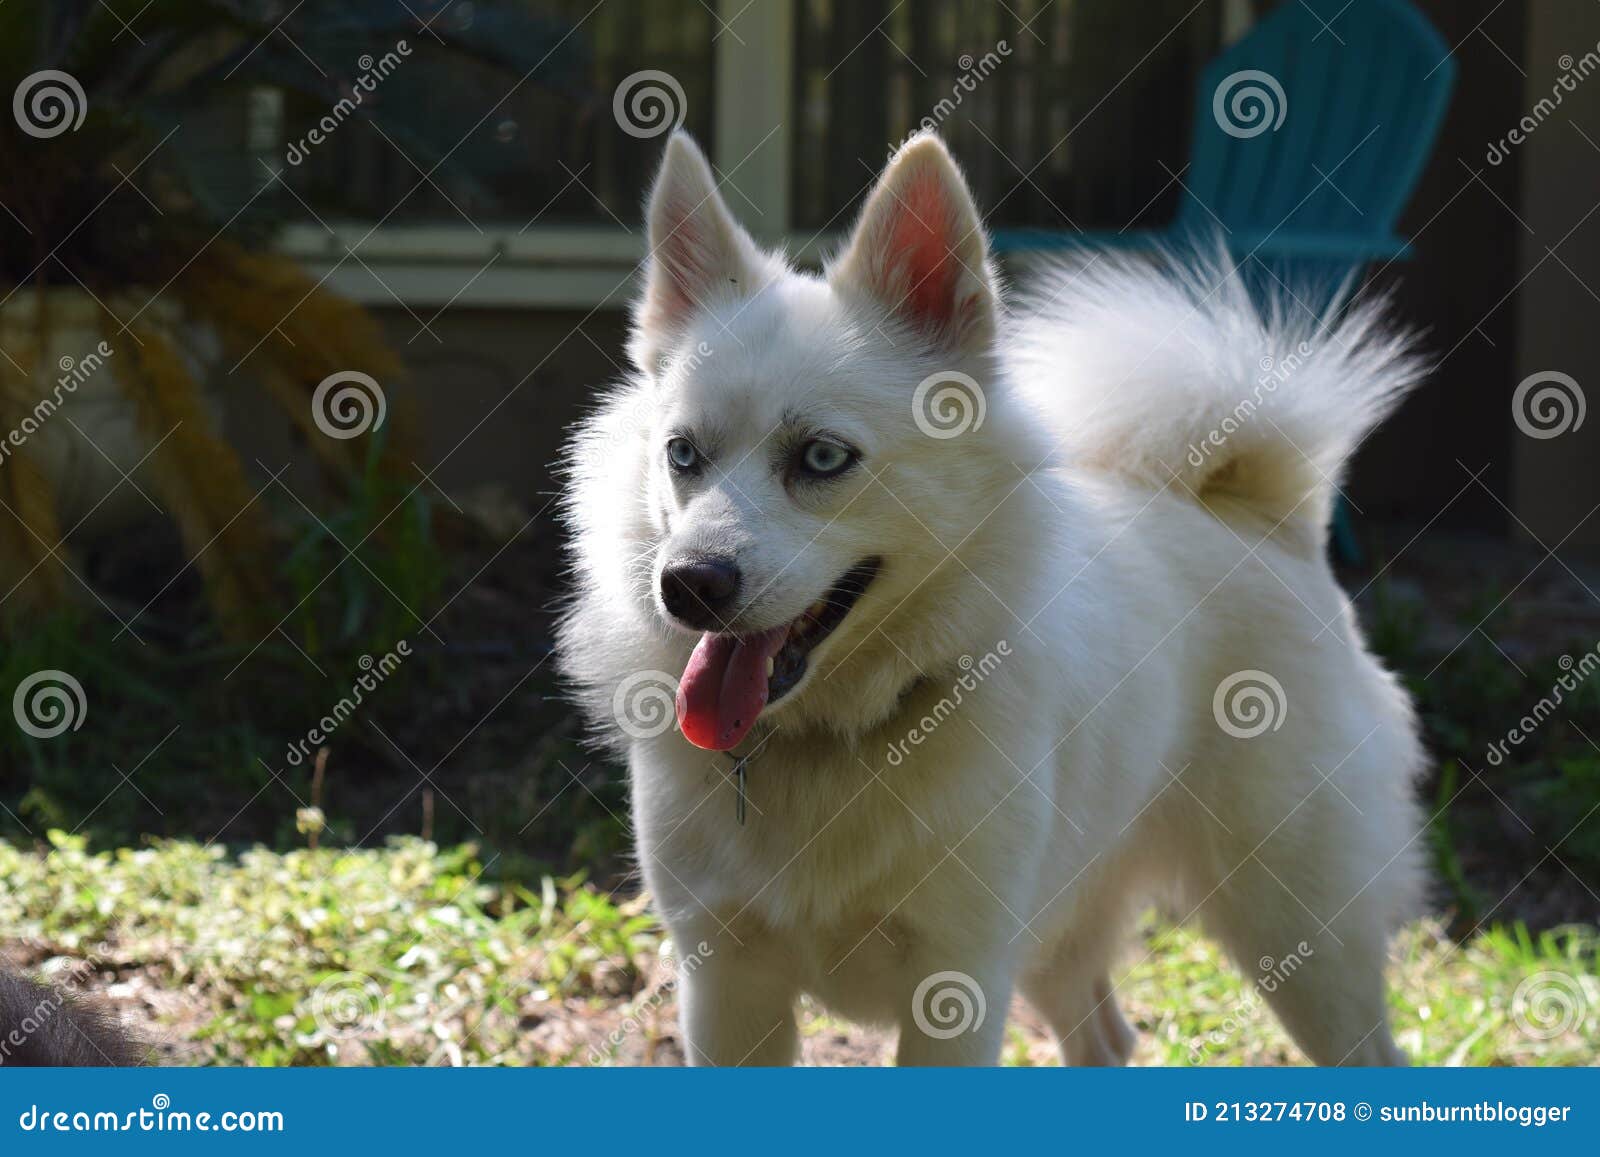 242 Pomeranian Husky Photos Free Royalty Free Stock Photos From Dreamstime